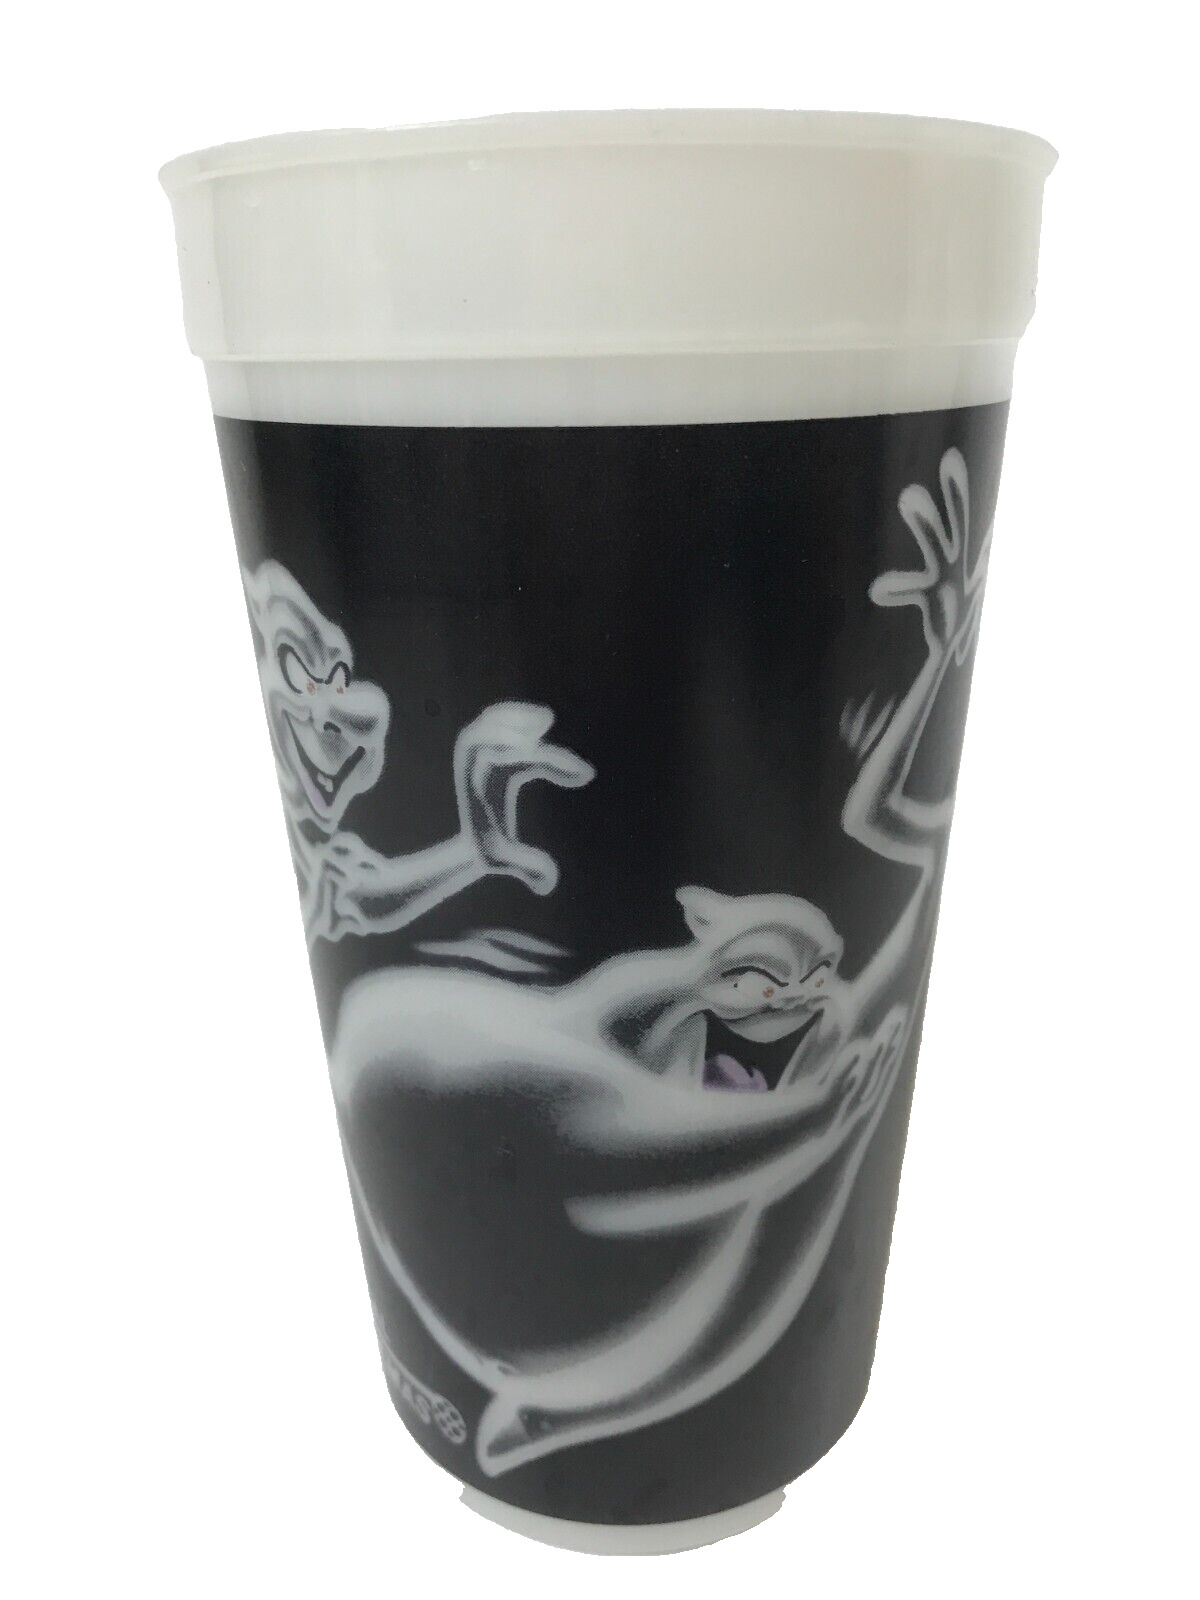 Casper The Friendly Ghost 1995 Regal Cinemas Pepsi Glow In Dark Cup